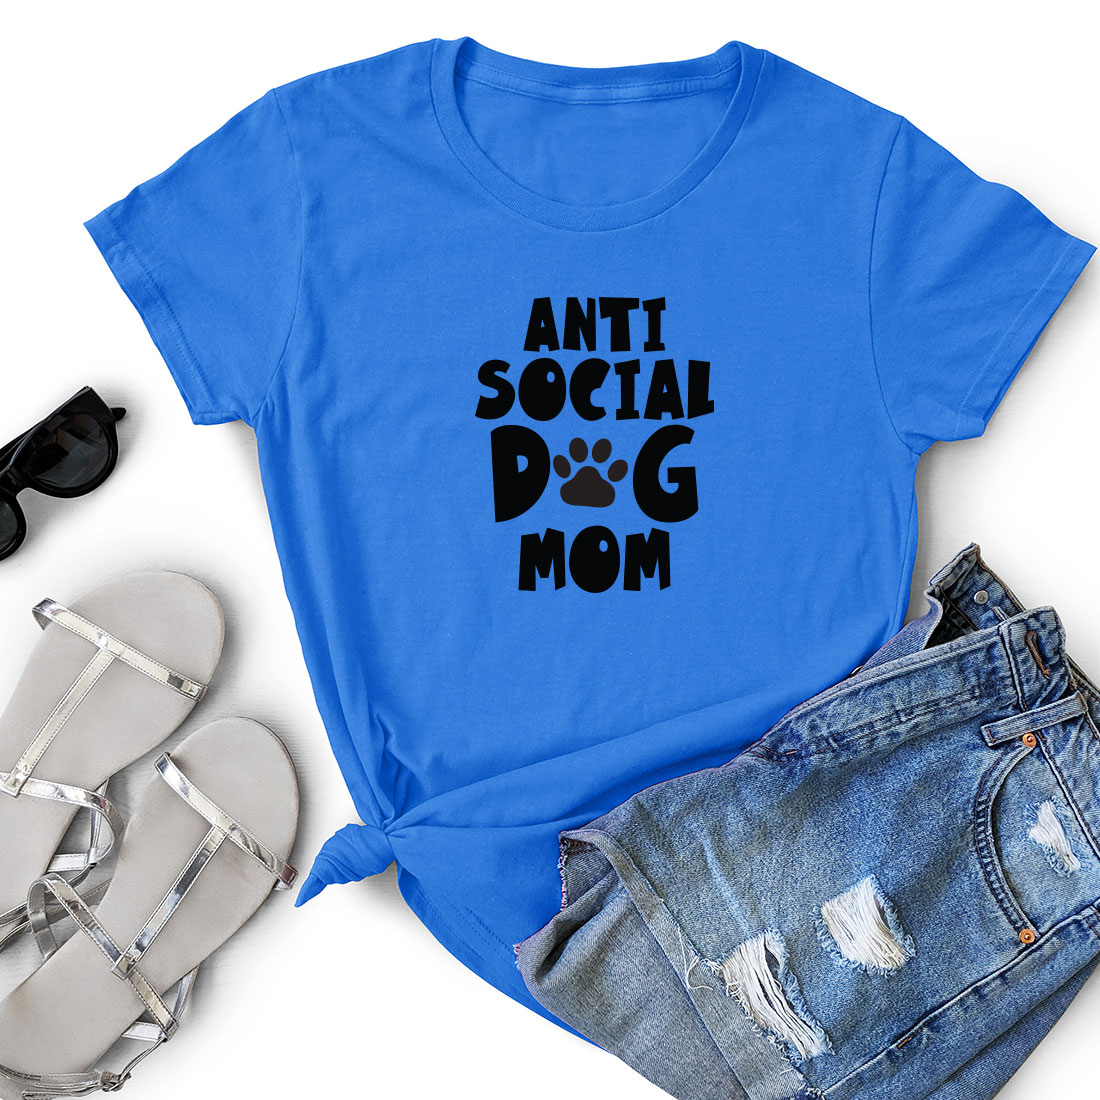 T - shirt that says anti social dog mom.